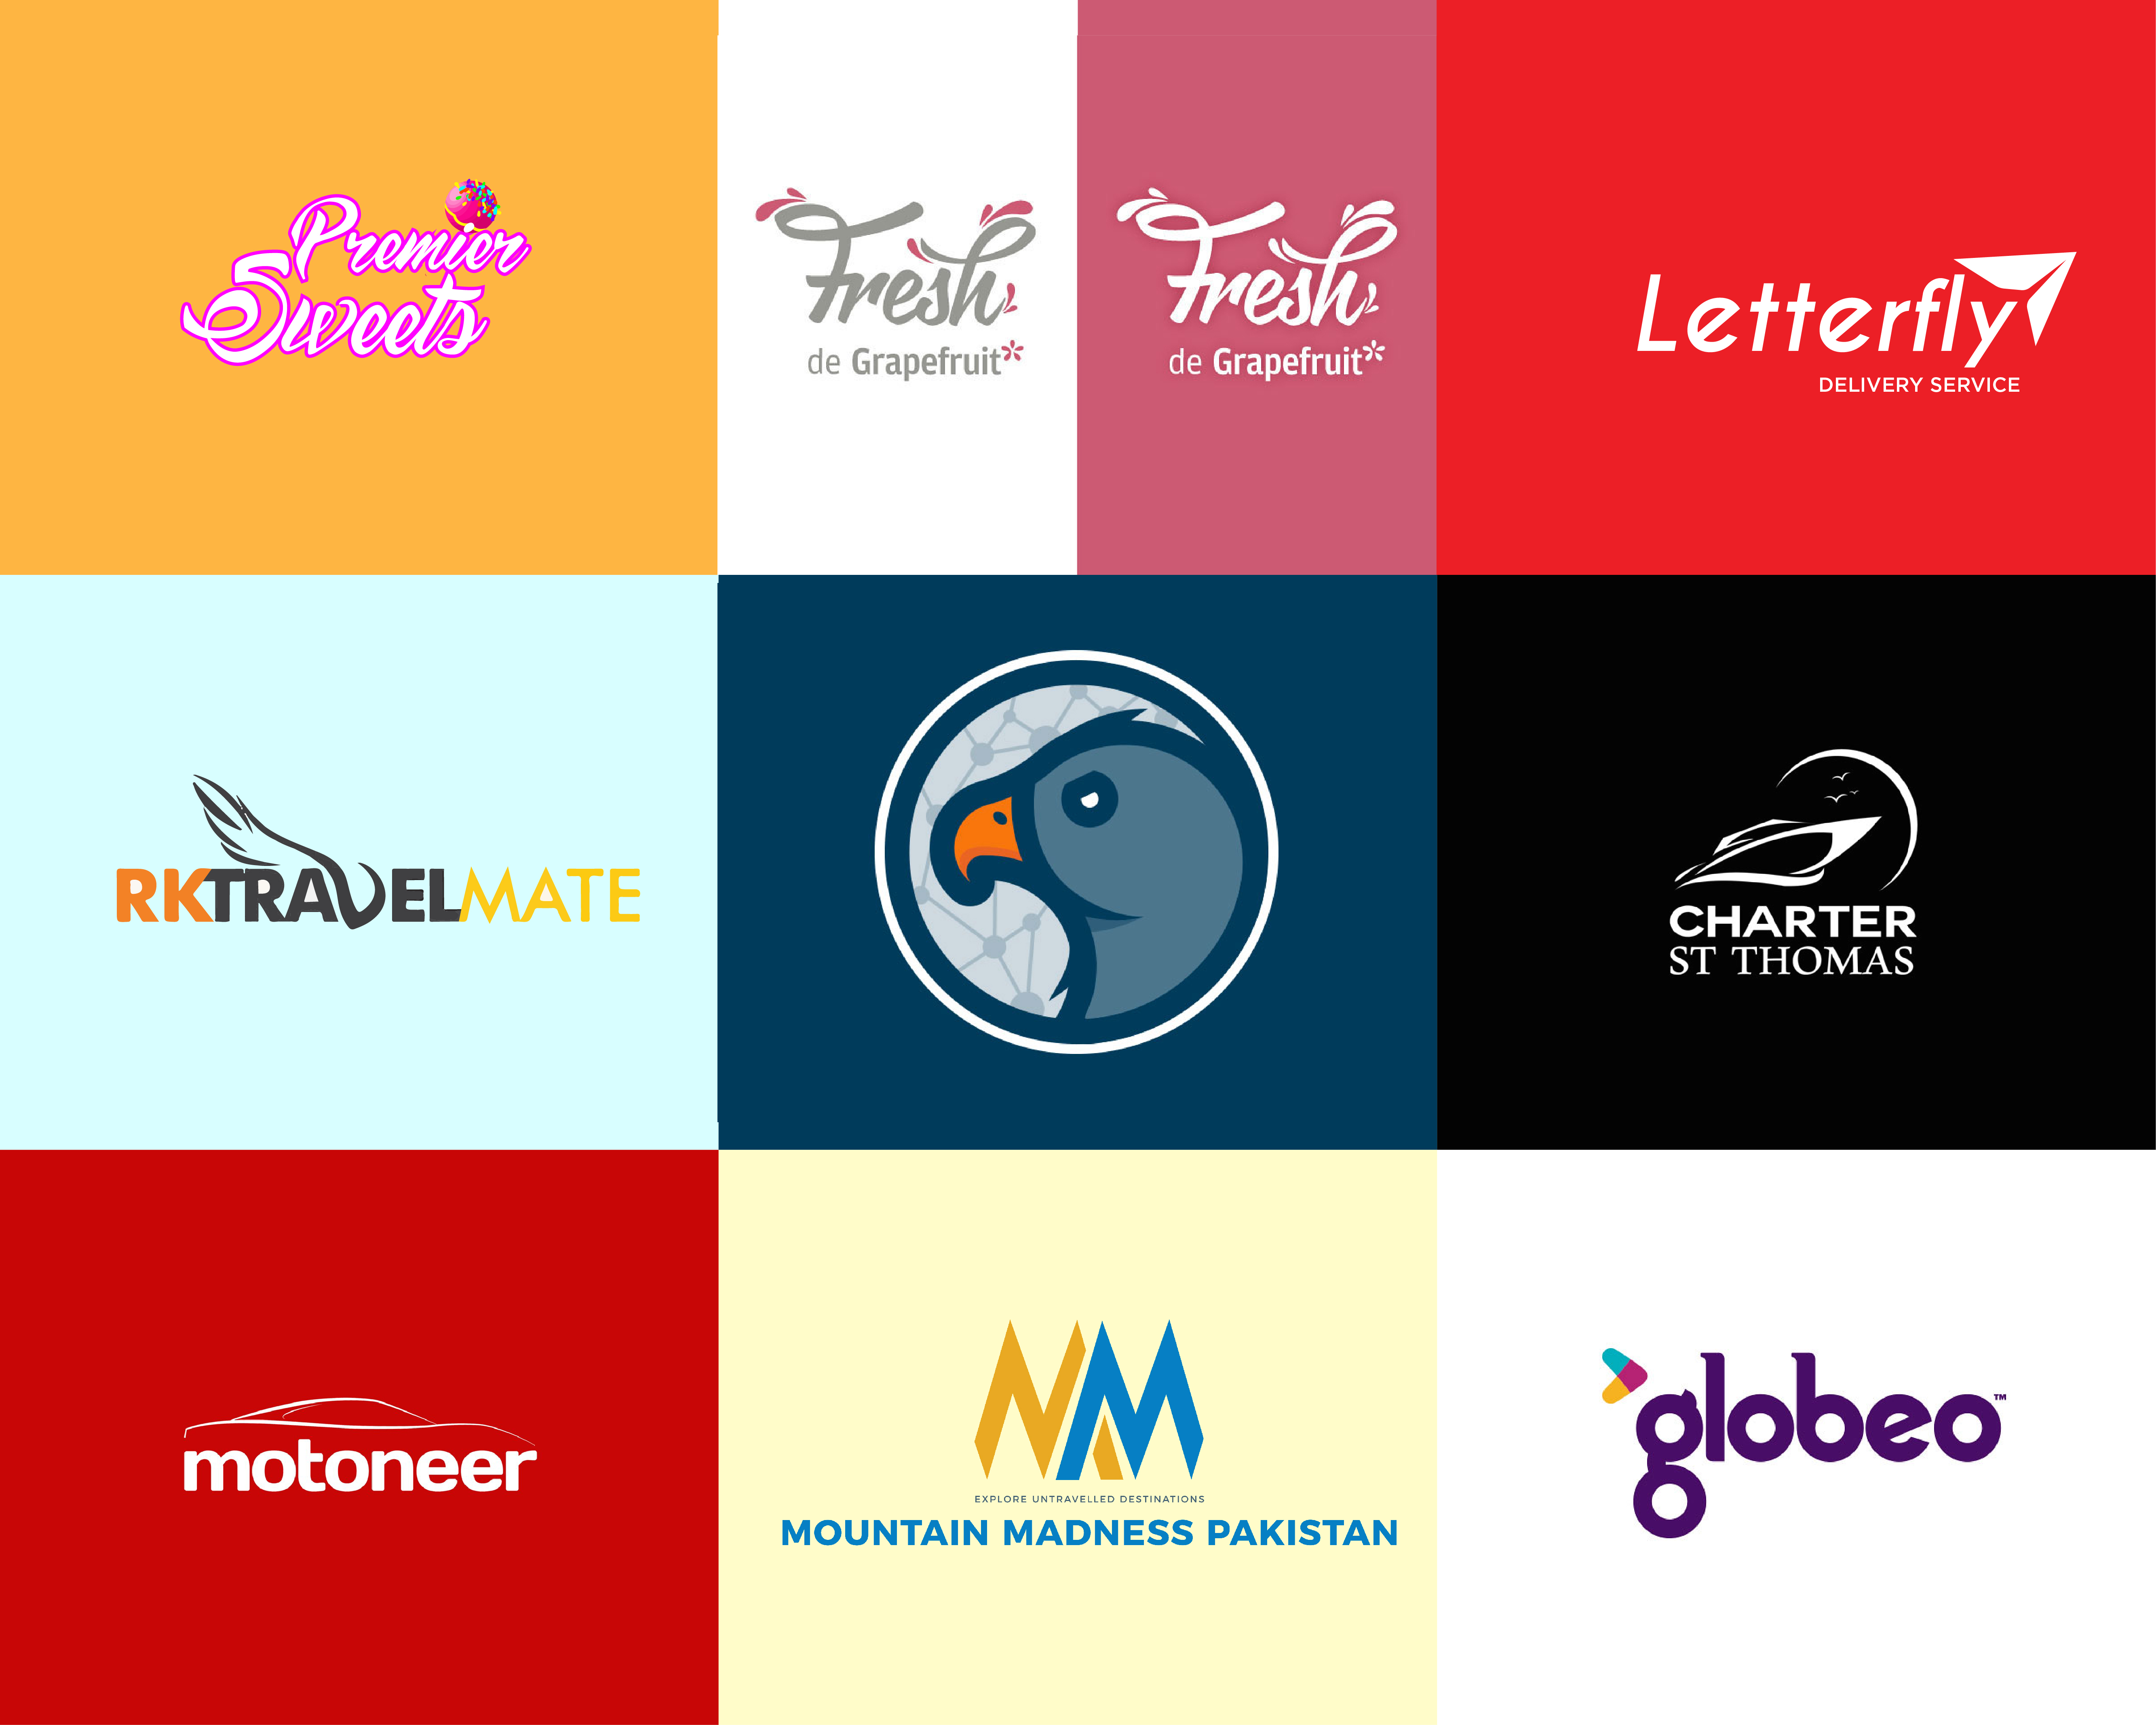 Design Your Modern Minimalist Business Logo For 5 Seoclerks